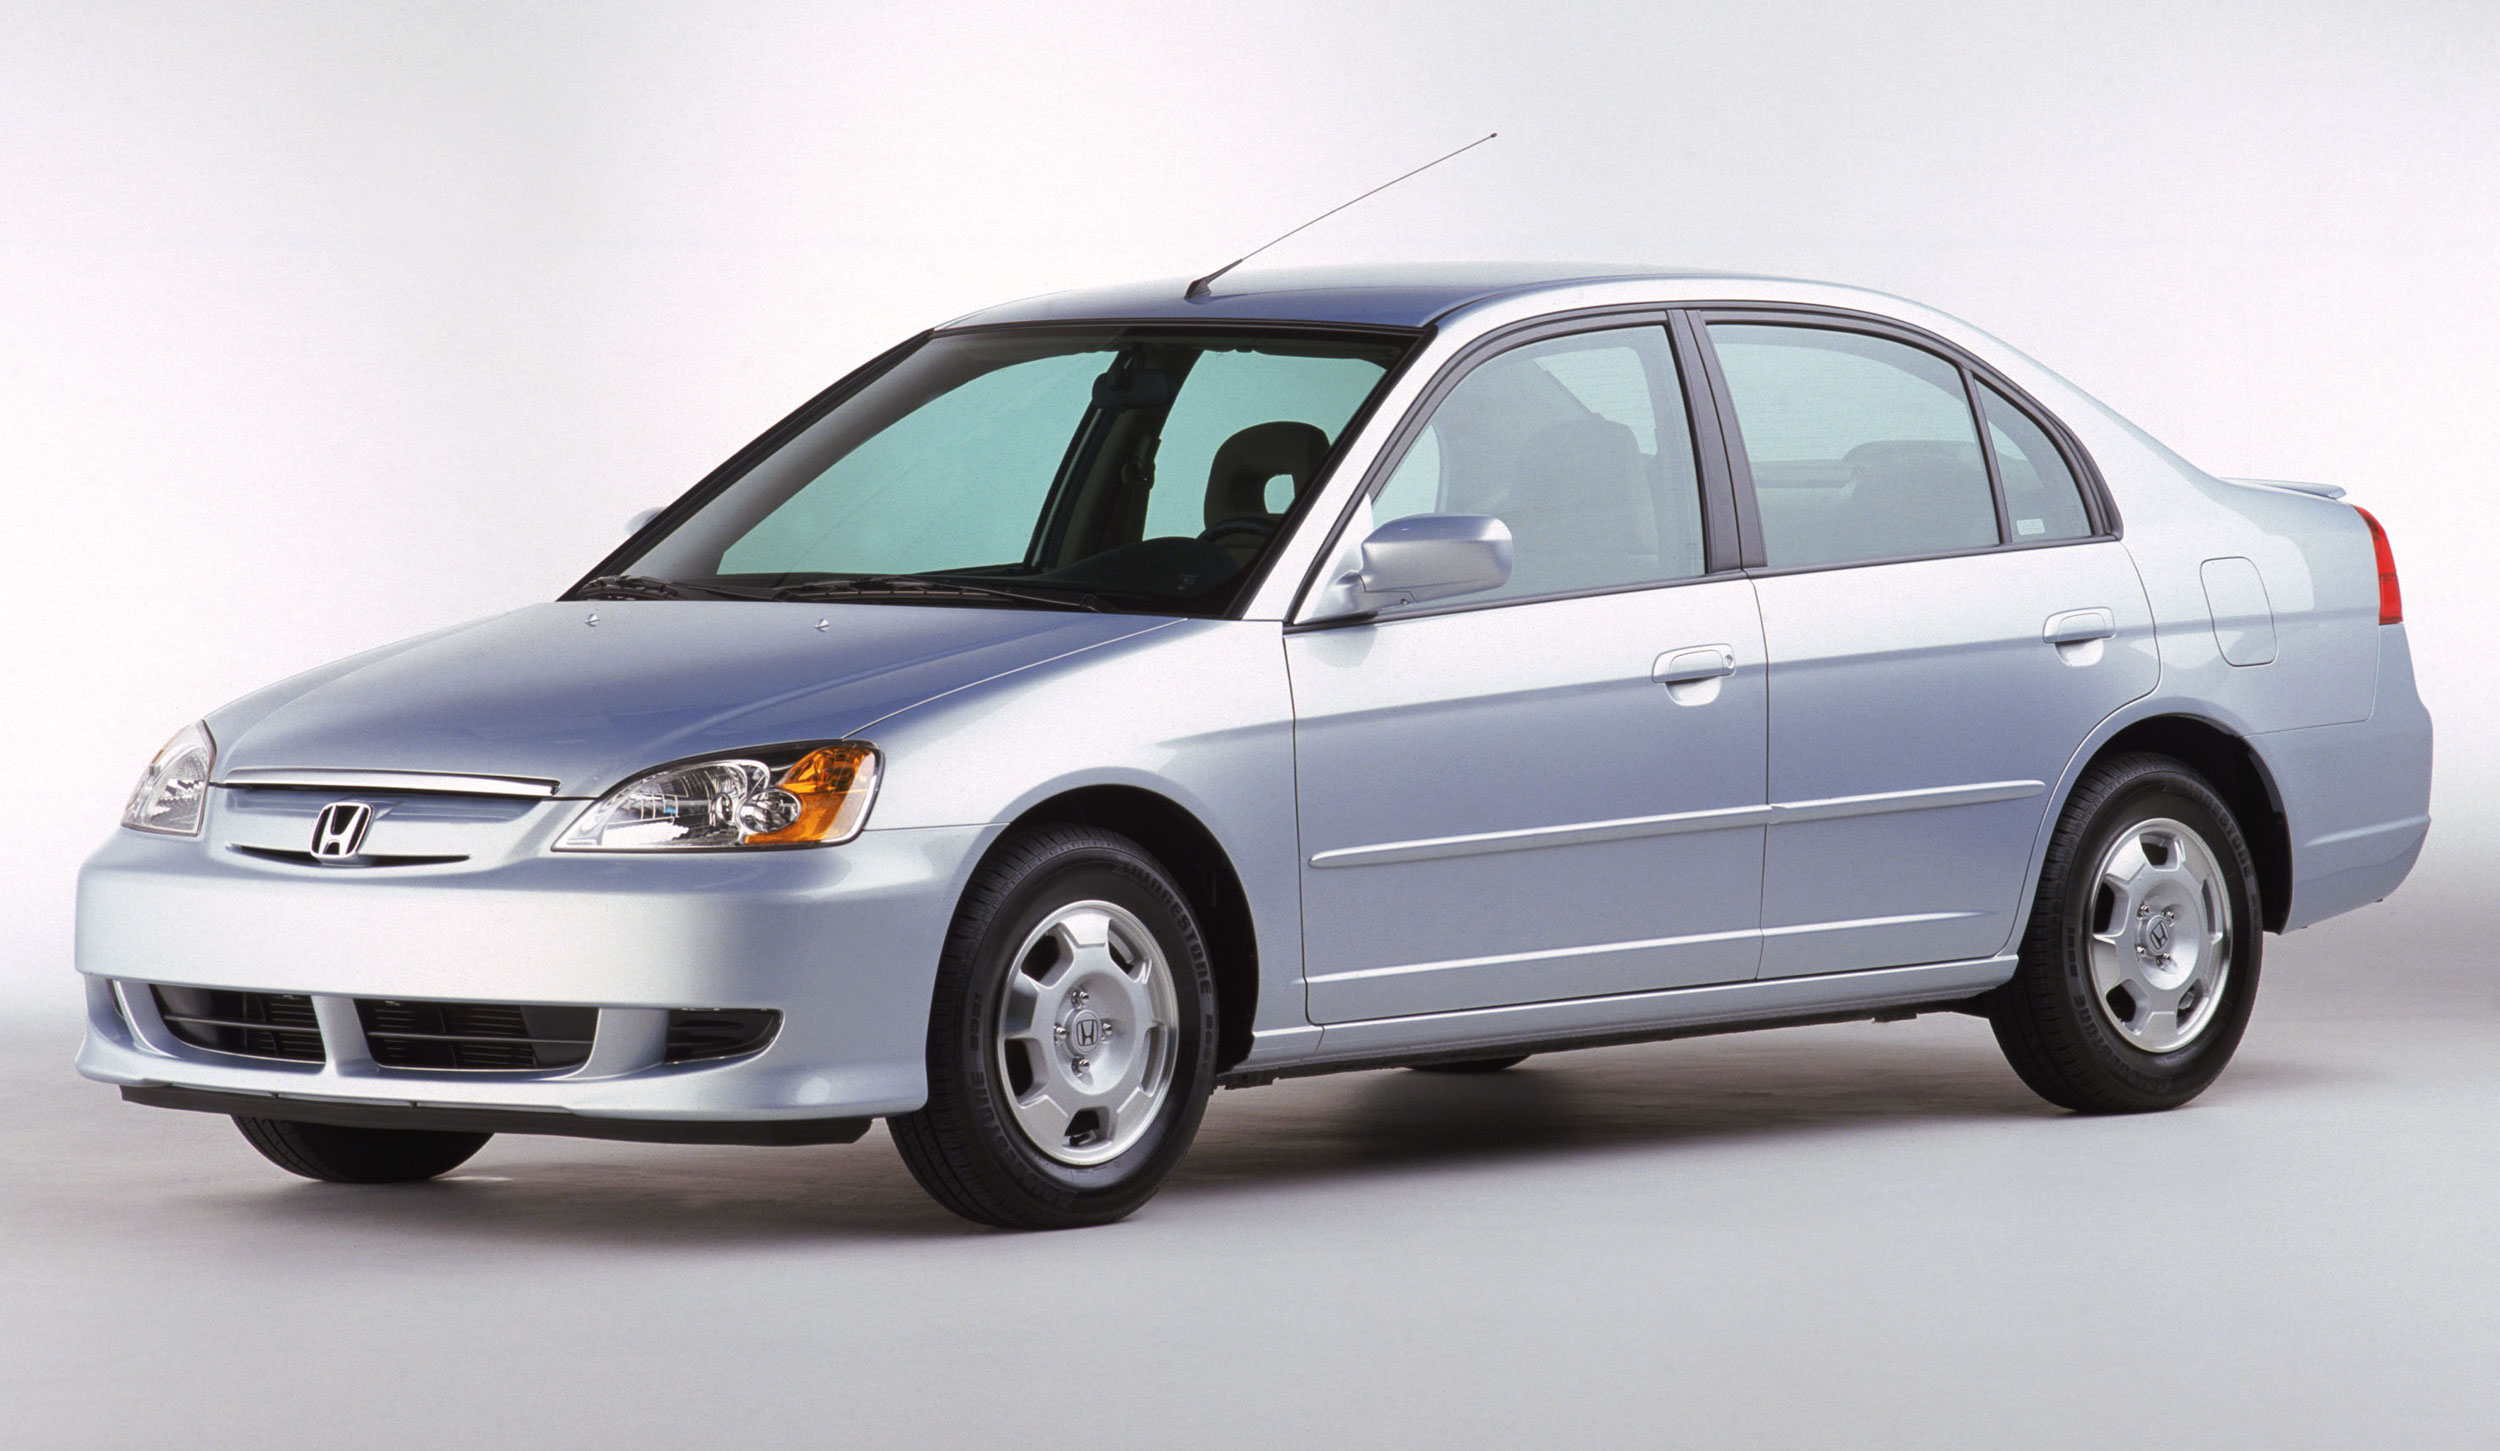 2003 Honda Civic Hybrid - HD Pictures @ carsinvasion.com